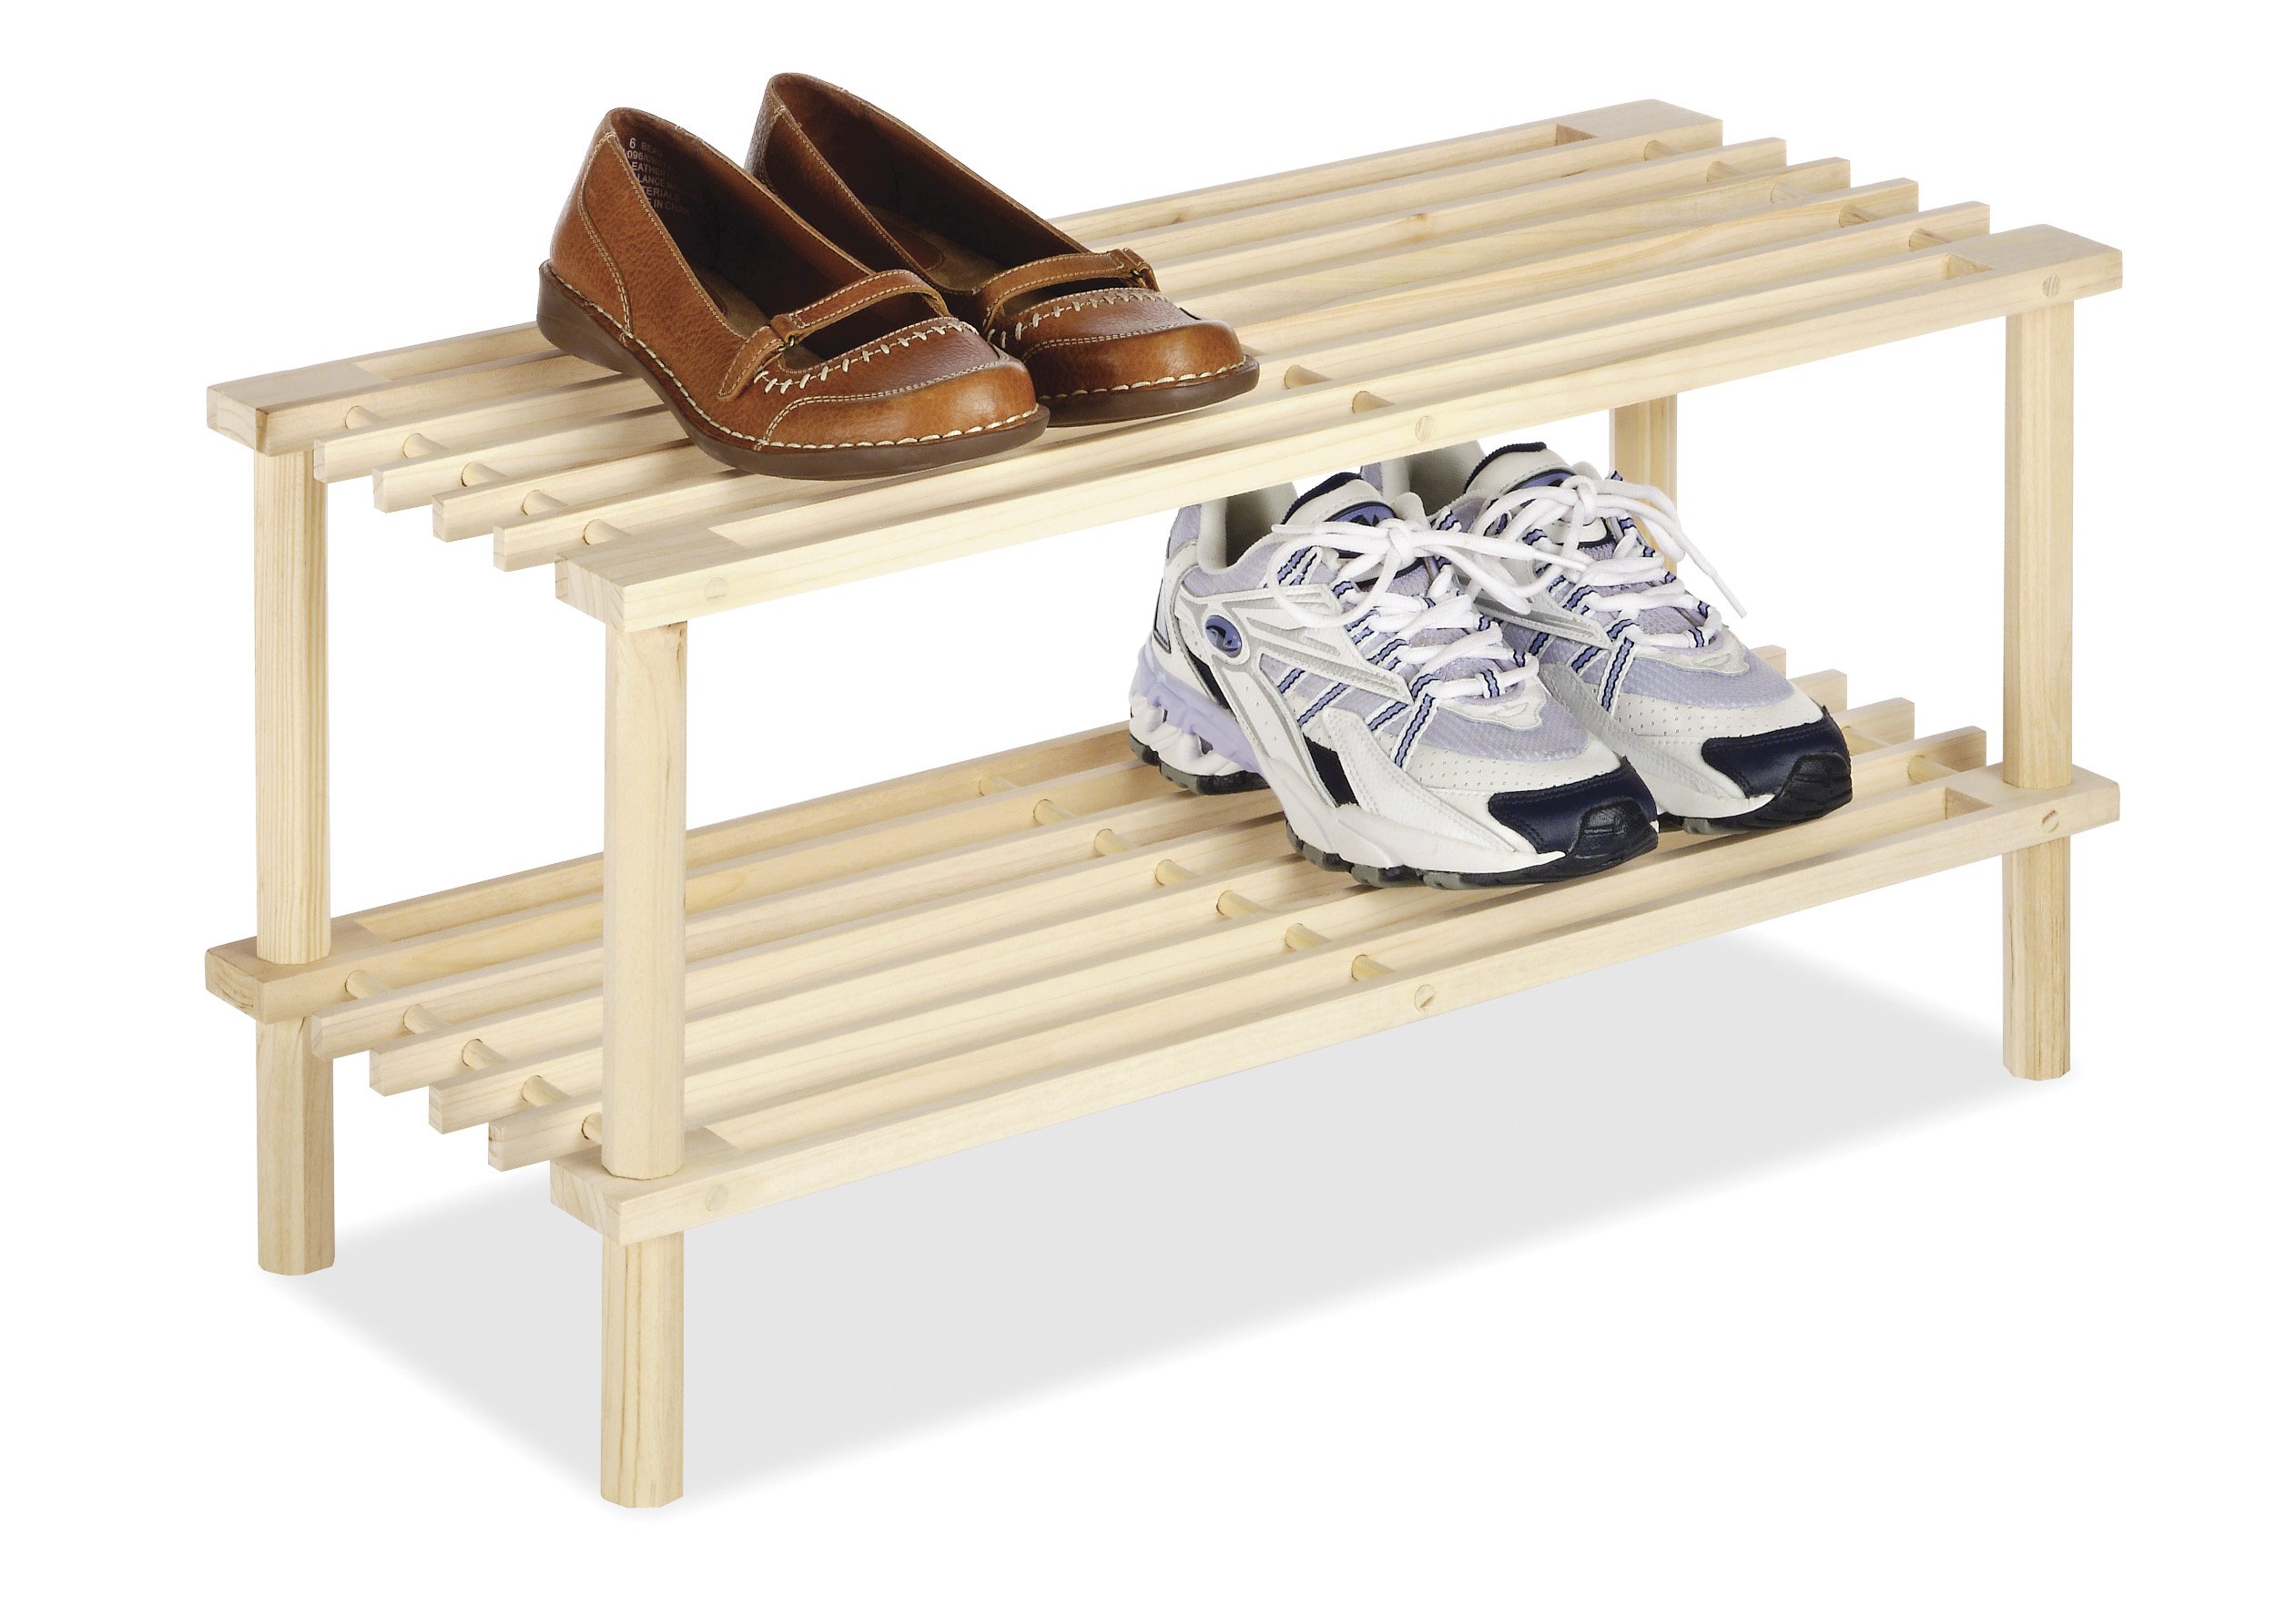 2-Tier Whitmor Wooden Shoe Shelf (Natural) $7.55 + Free Shipping w/ Prime or $25+